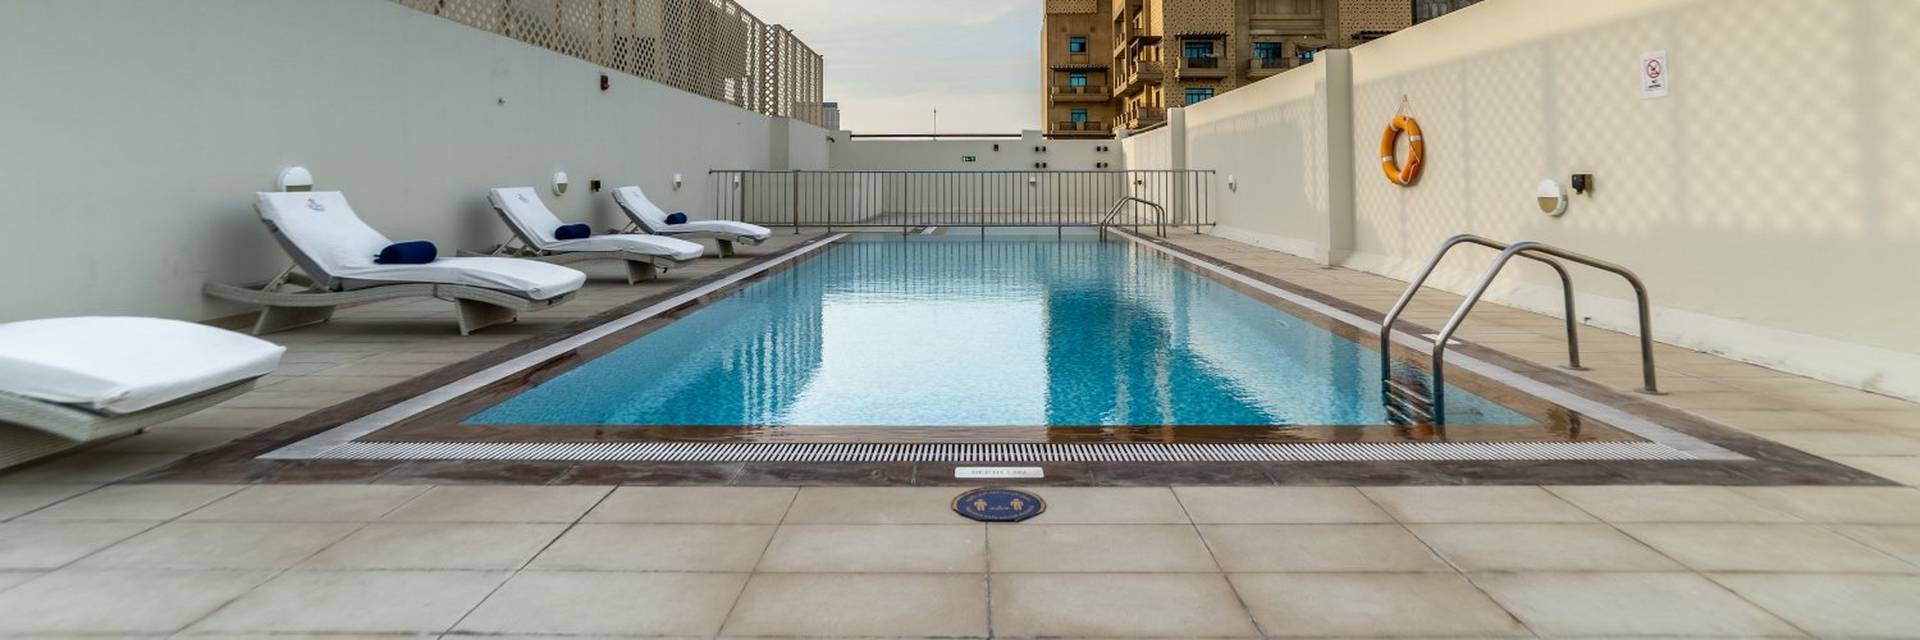 Services Suha Creek Hotel Apartments, Waterfront,Al JADDAF Dubai